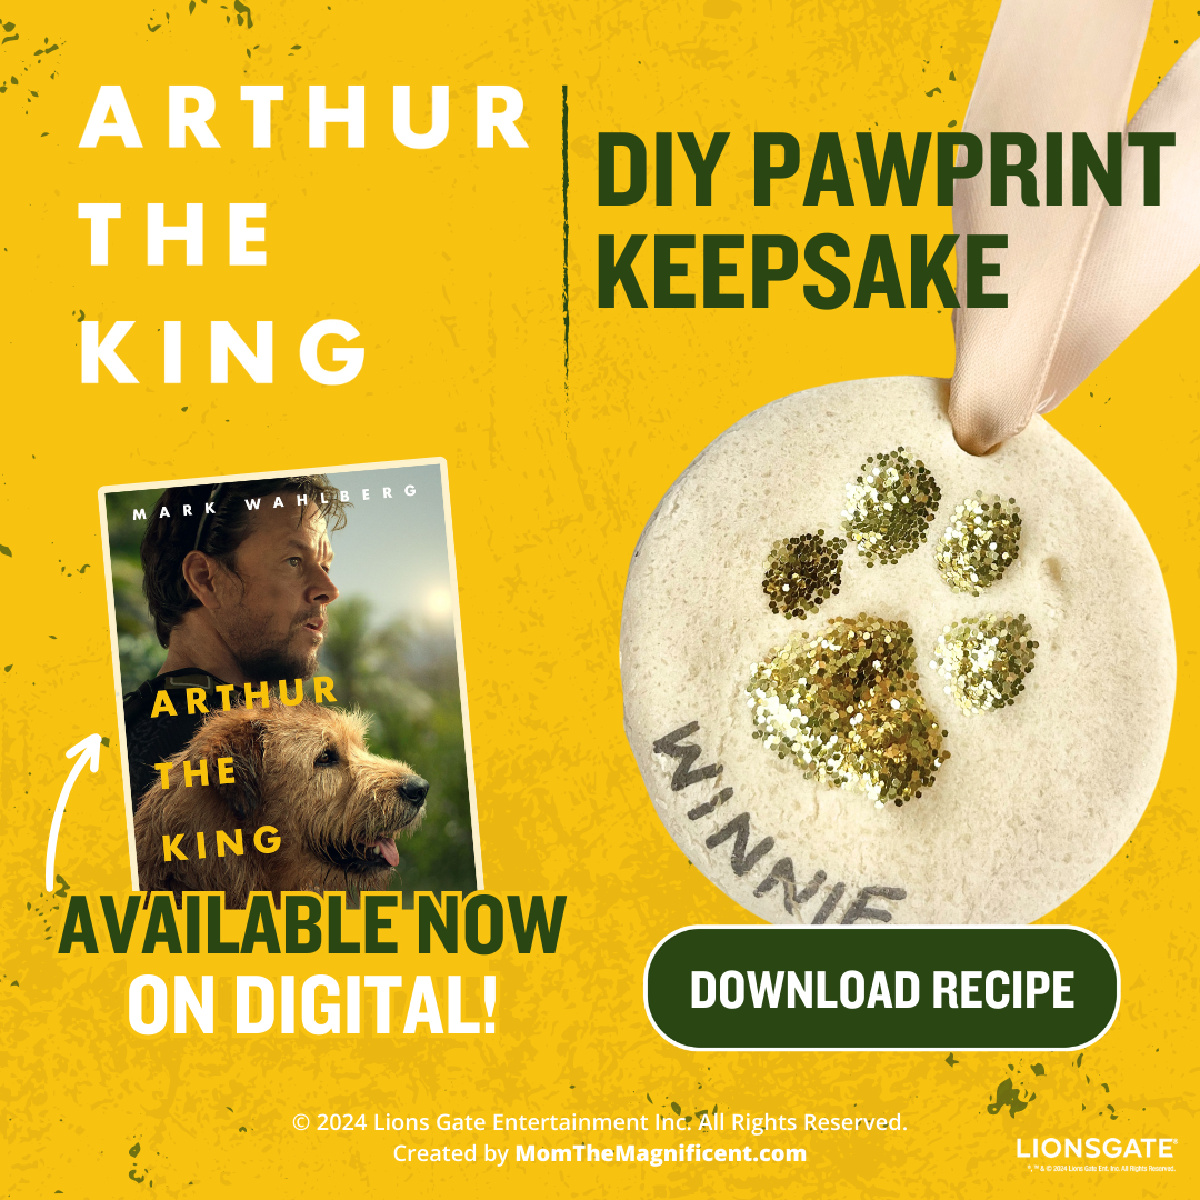 DIY Pawprint Keepsake inspired by Arthur the King